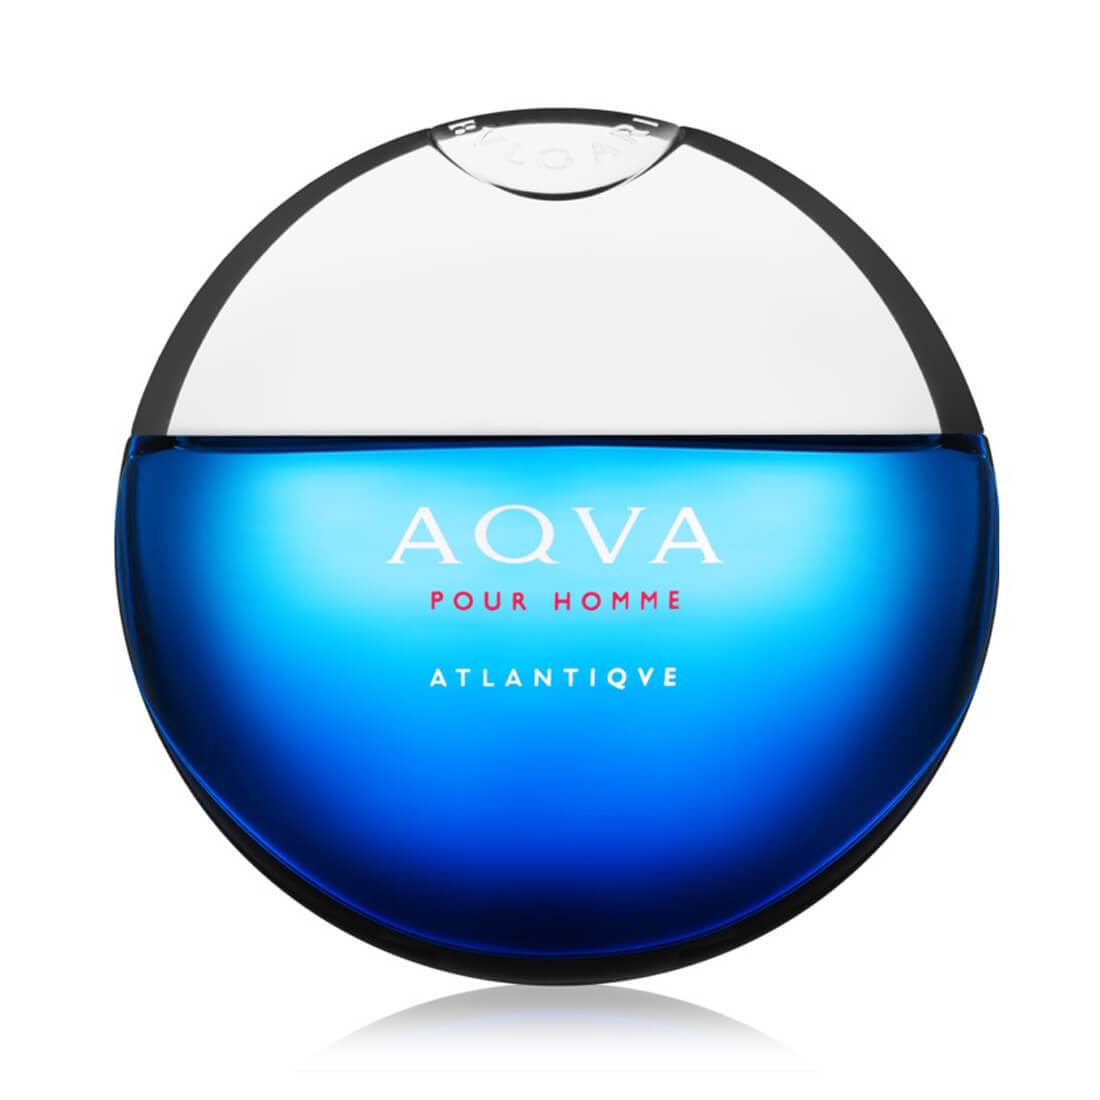 Bvlgari Aqva Pour Homme Atlantique EDT Perfume For Men - 100ml